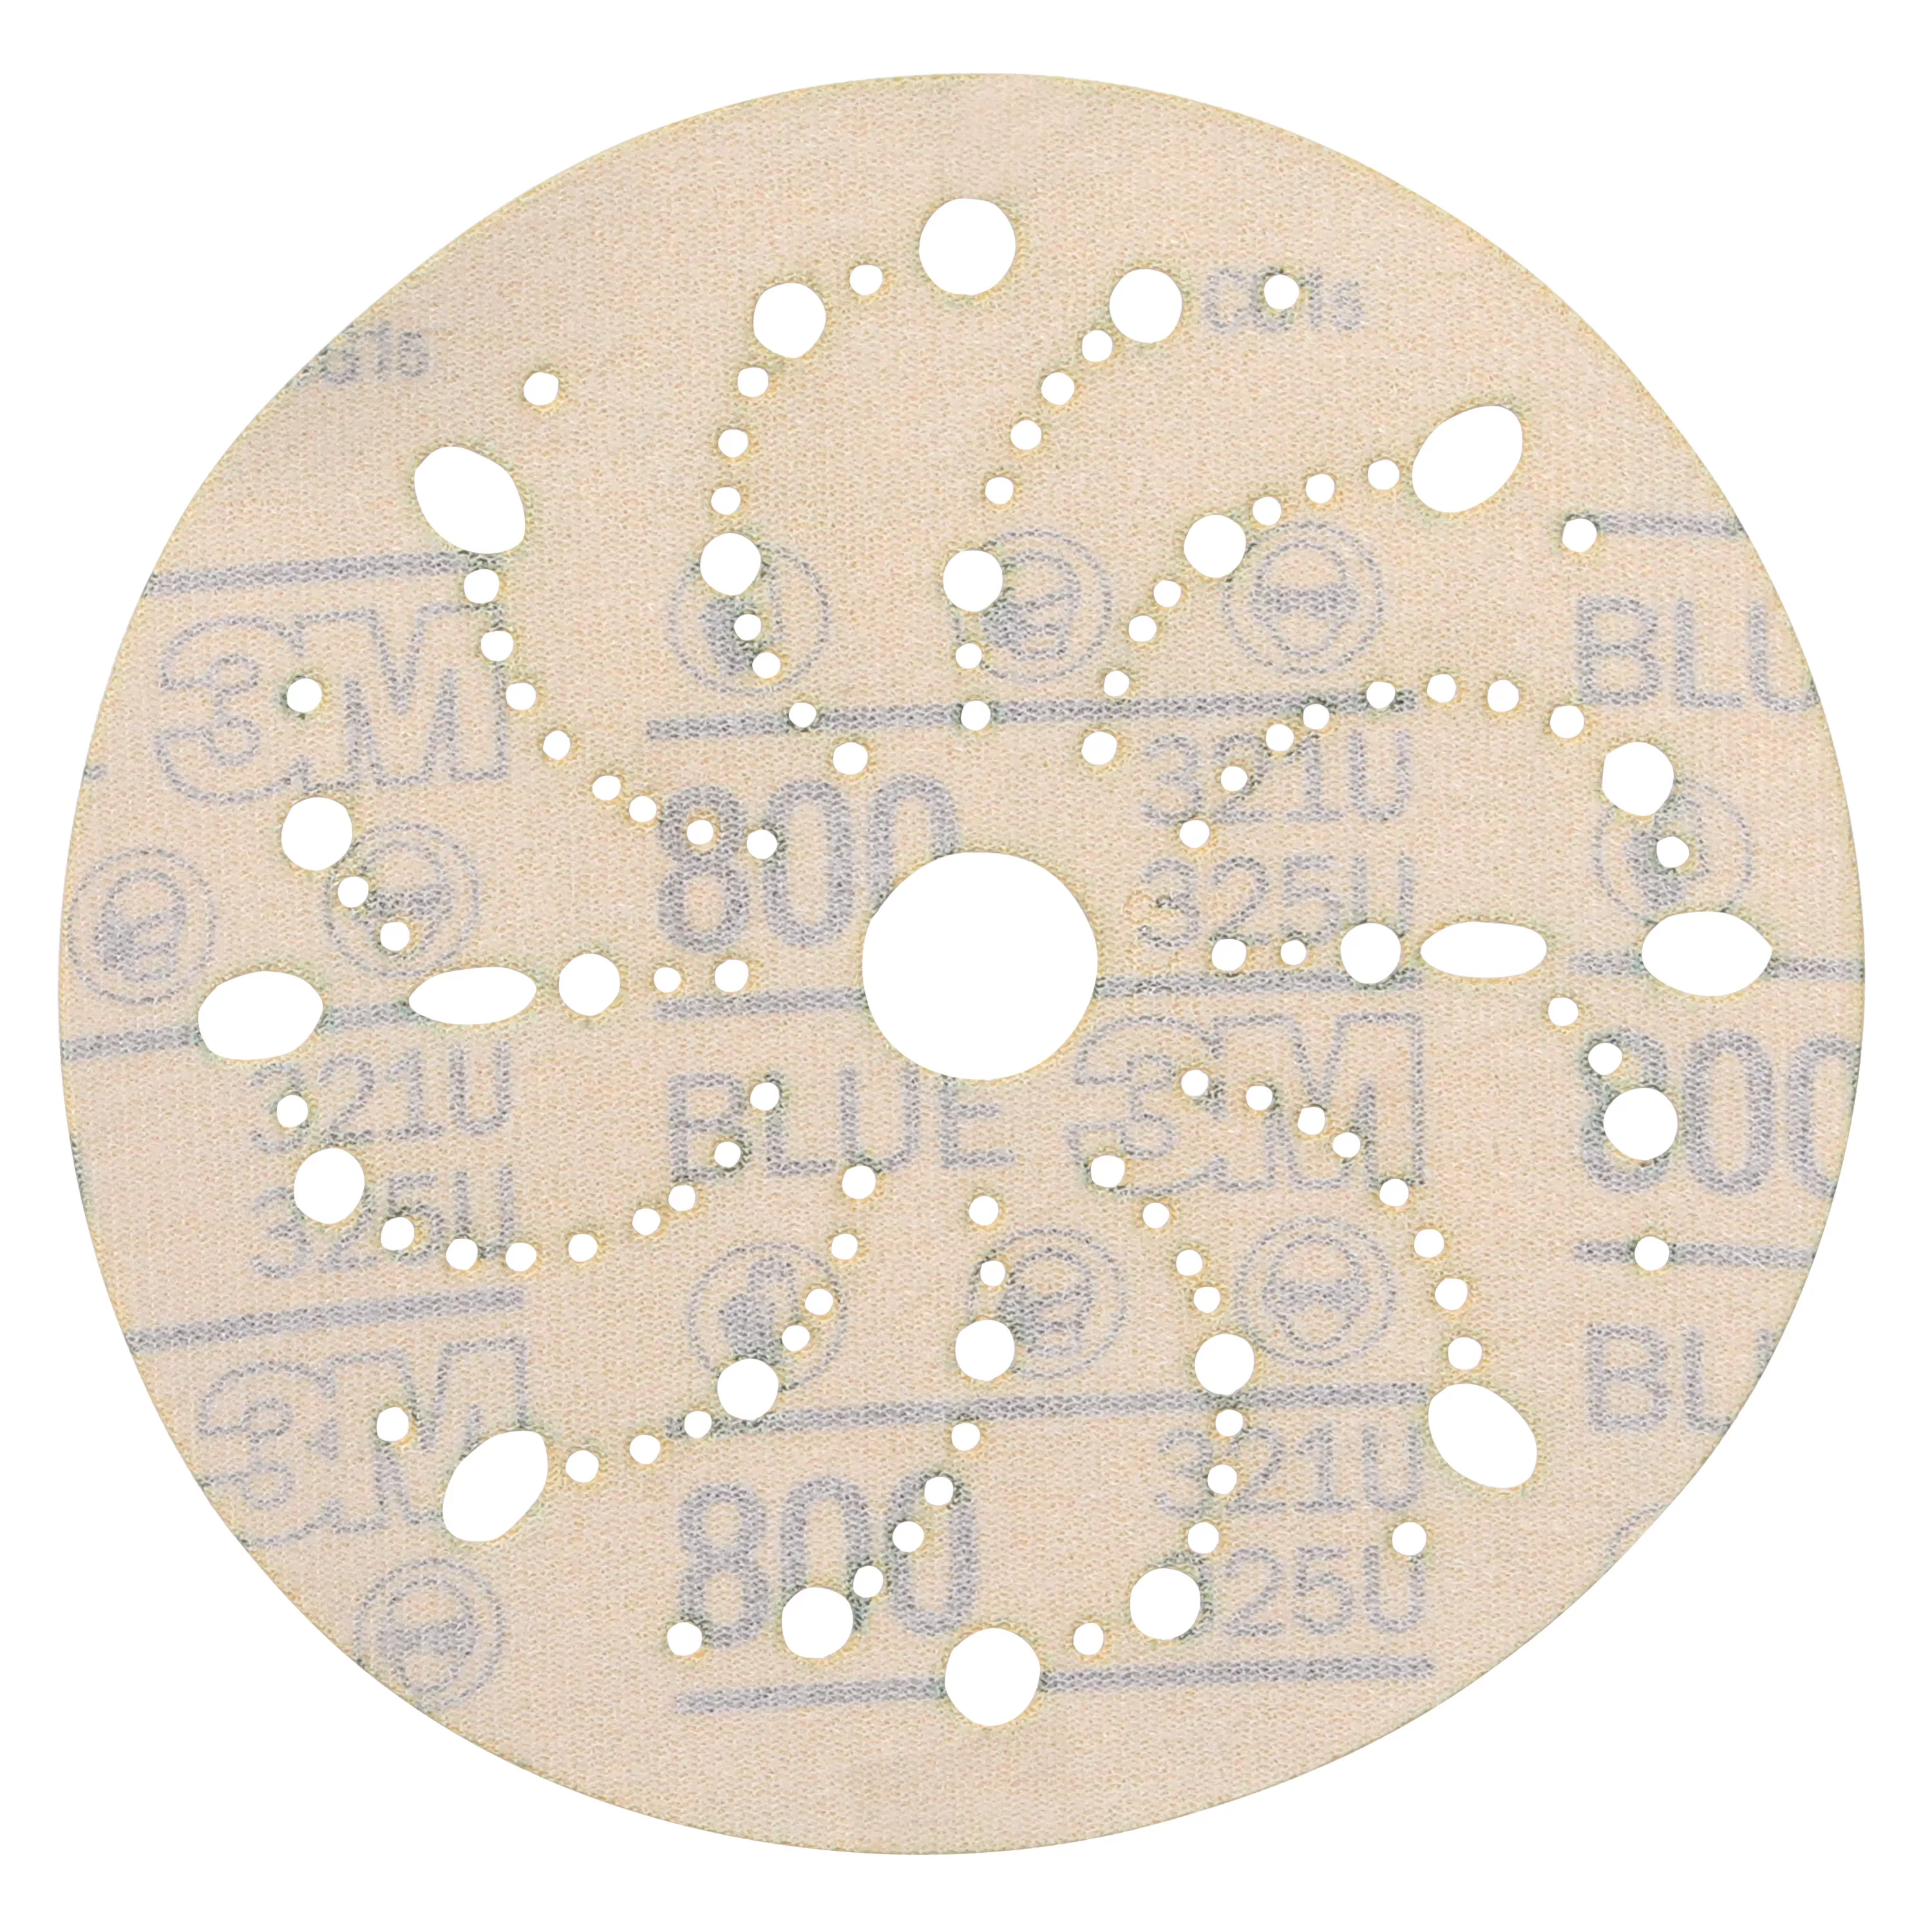 SKU 7100091111 | 3M™ Hookit™ Blue Abrasive Disc 321U Multi-hole